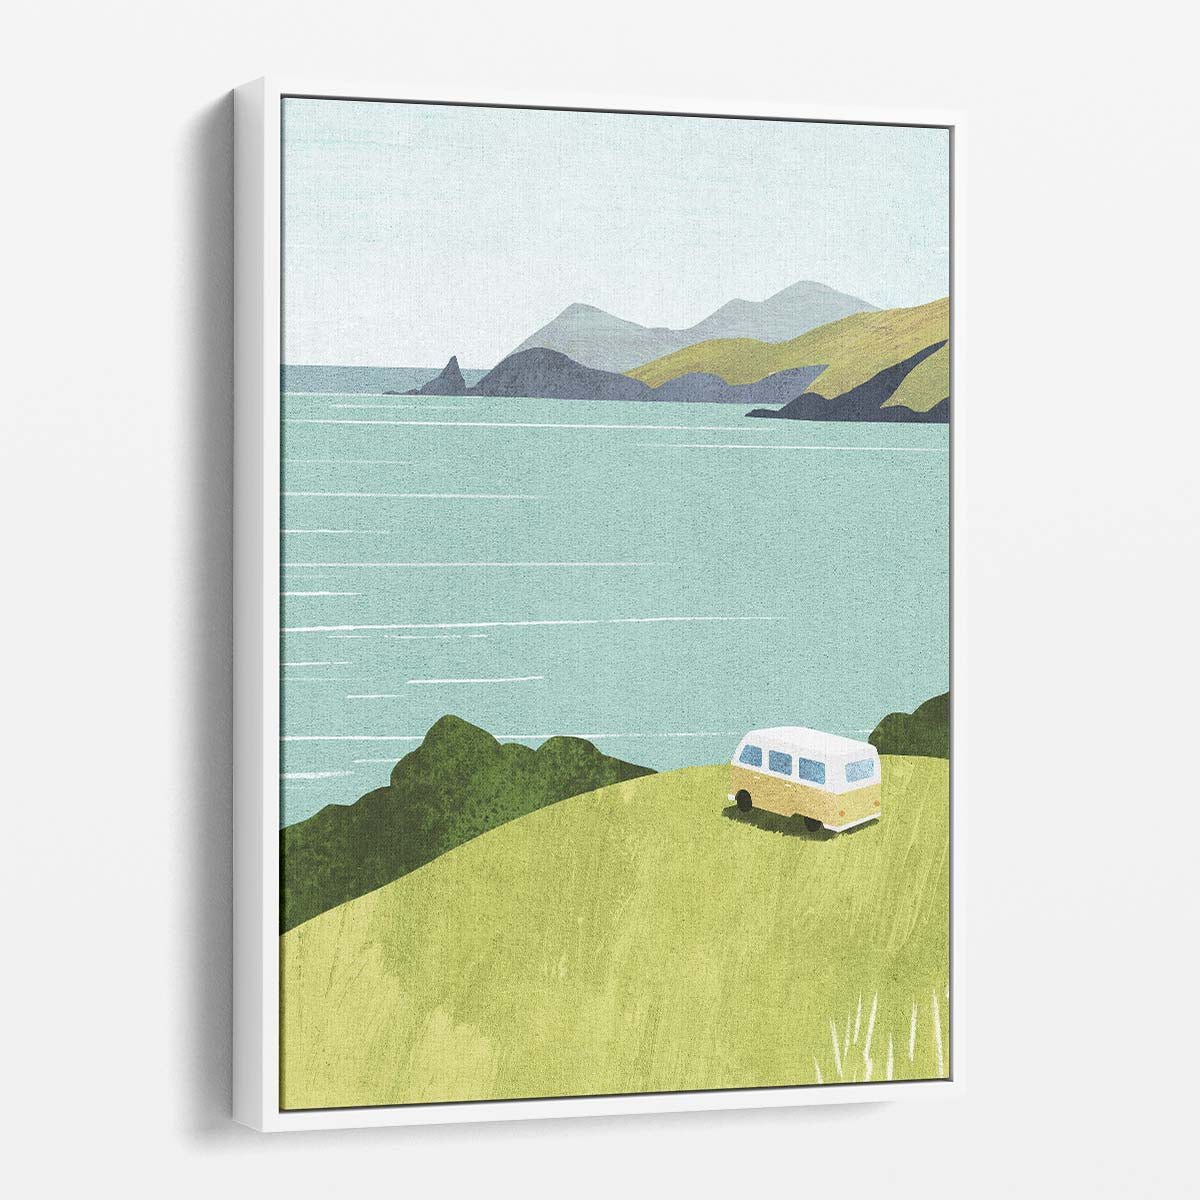 UK Cornwall Seaside Van Life Illustration, Coastal Landscape Art by Luxuriance Designs, made in USA